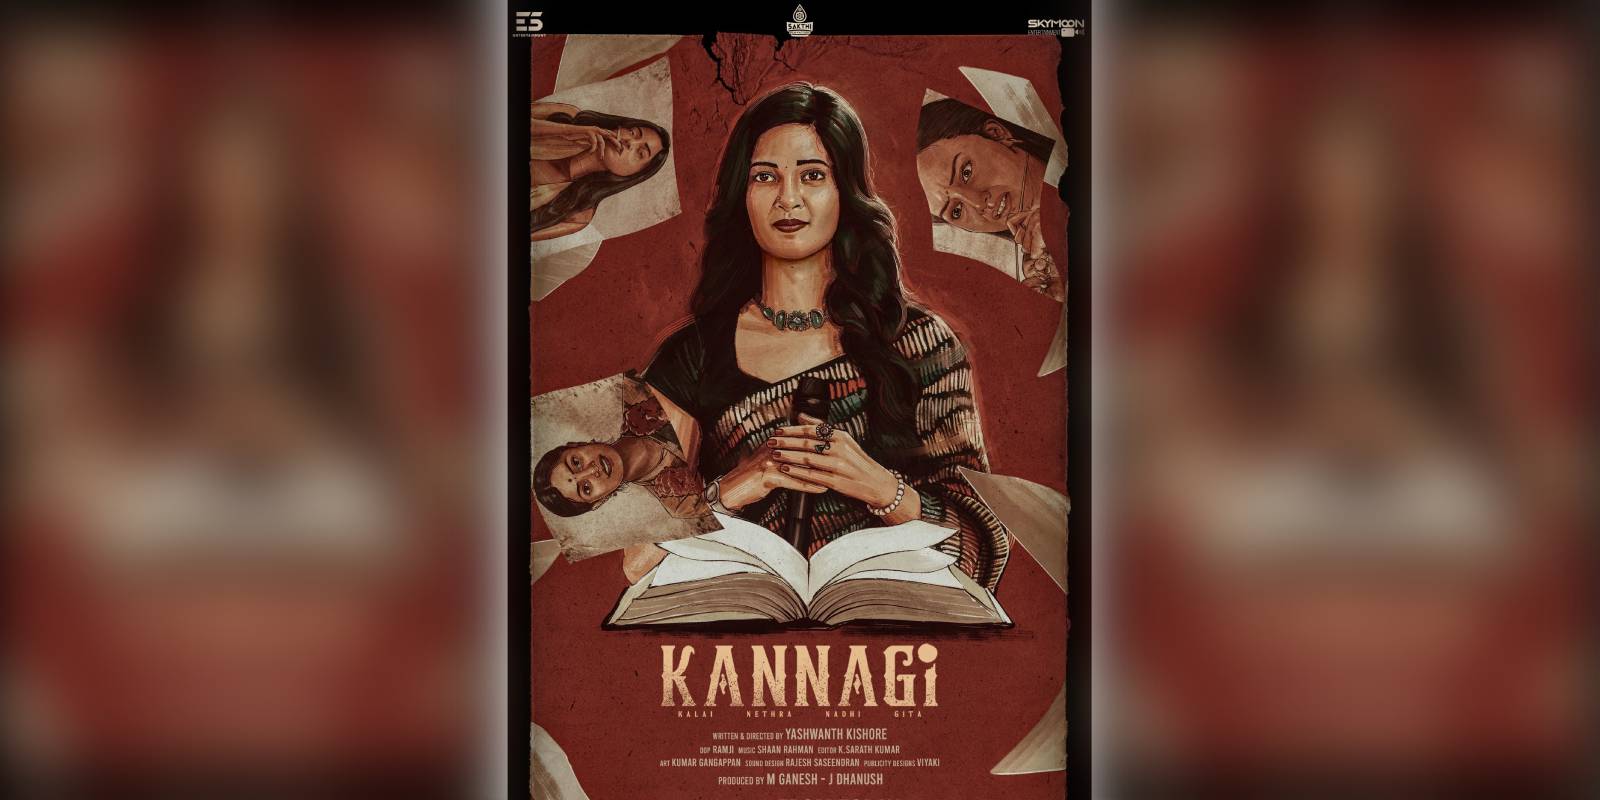 A poster of the film Kannagi